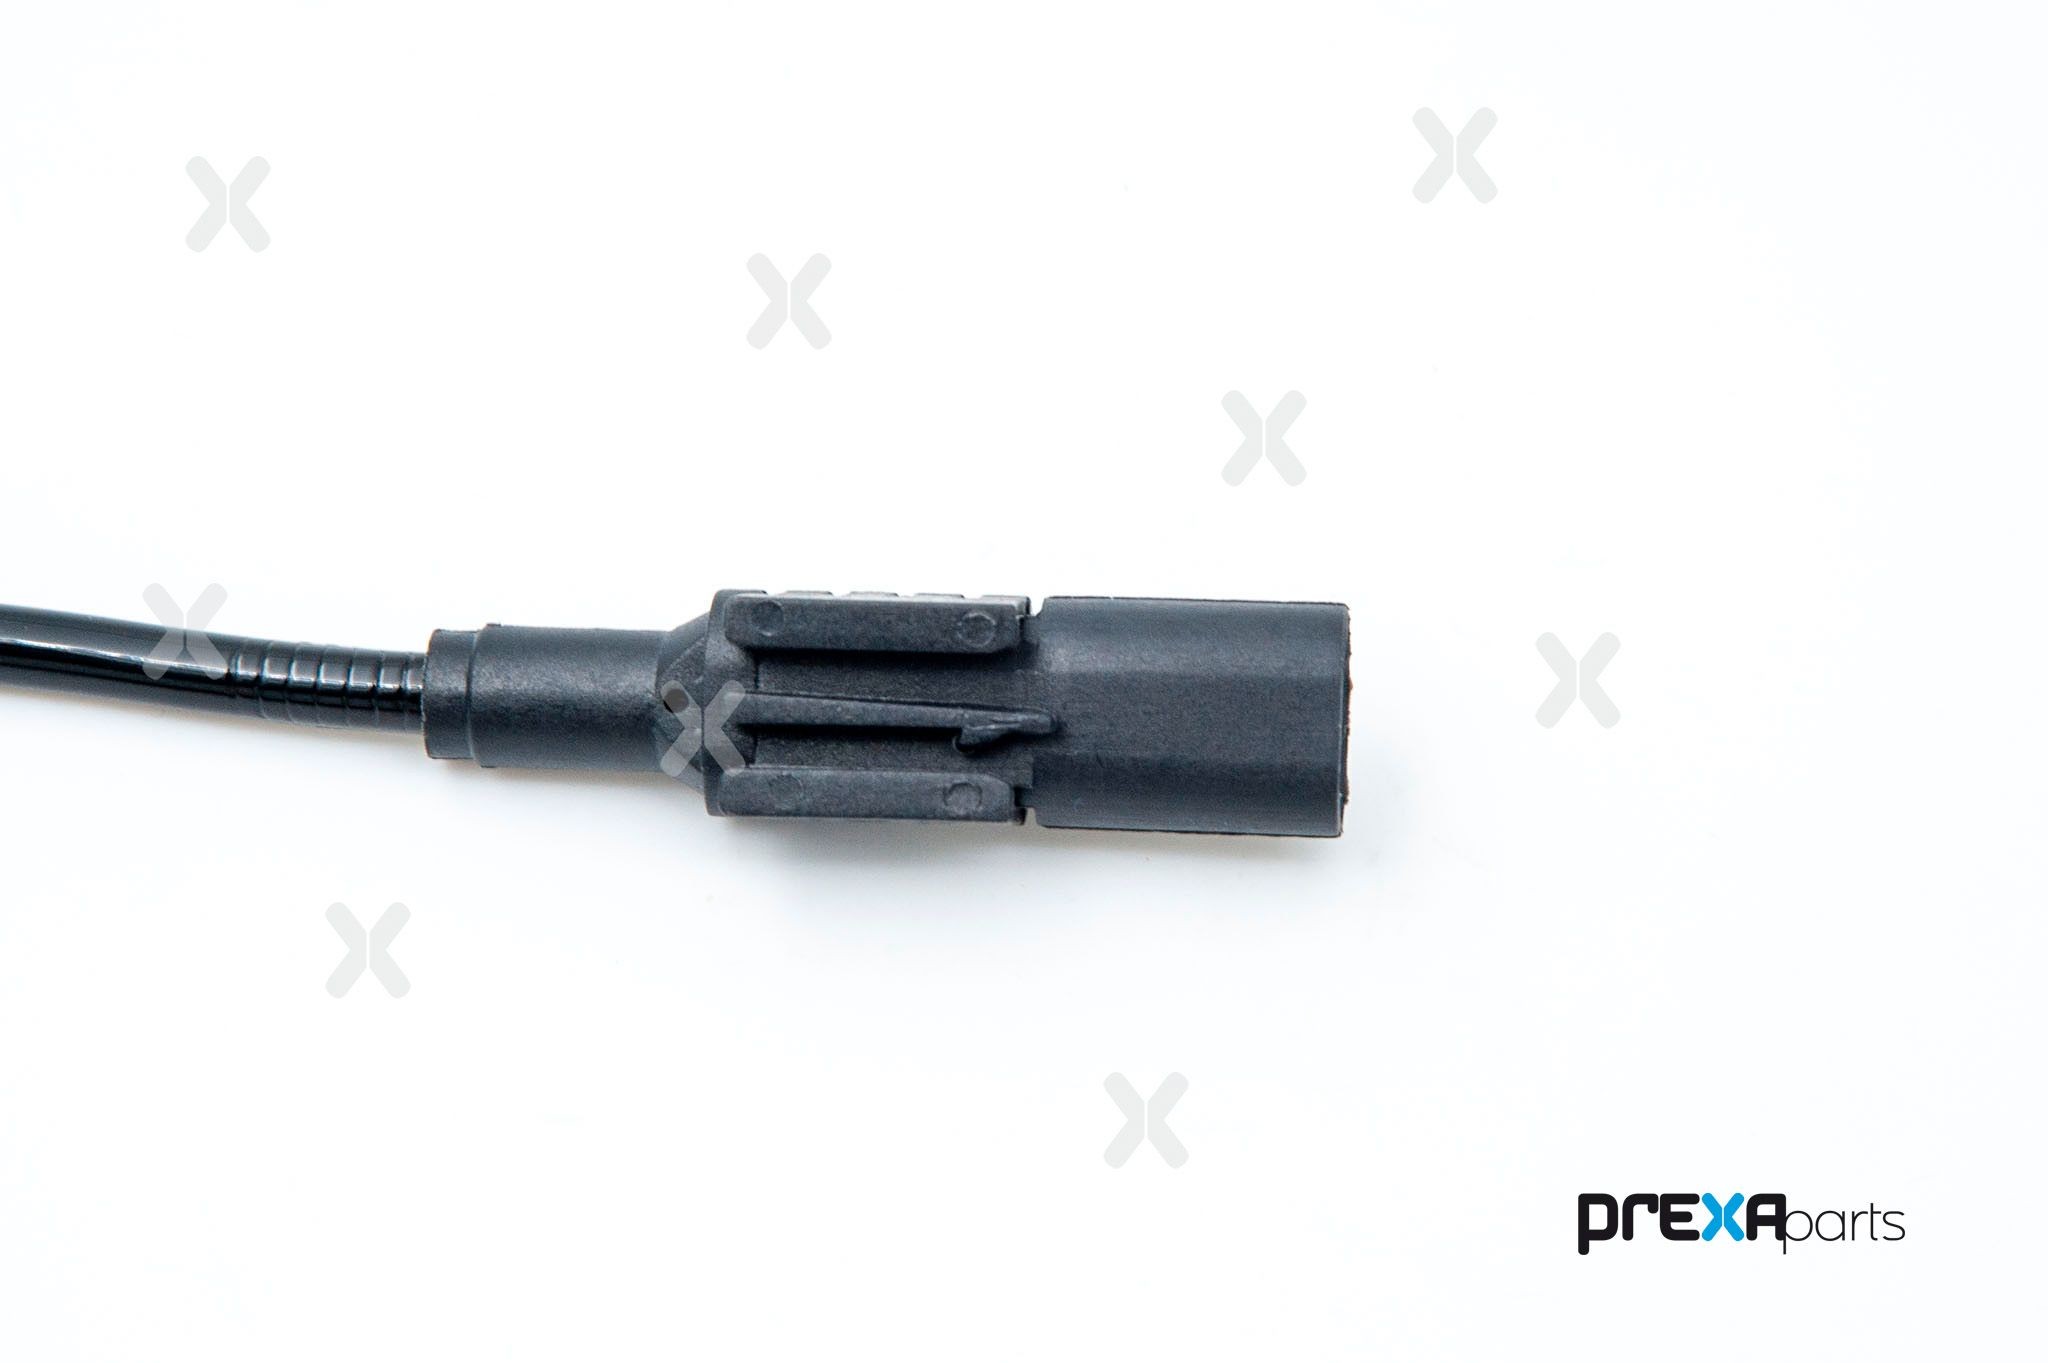 P301111 Anti lock brake sensor PREXAparts P301111 review and test